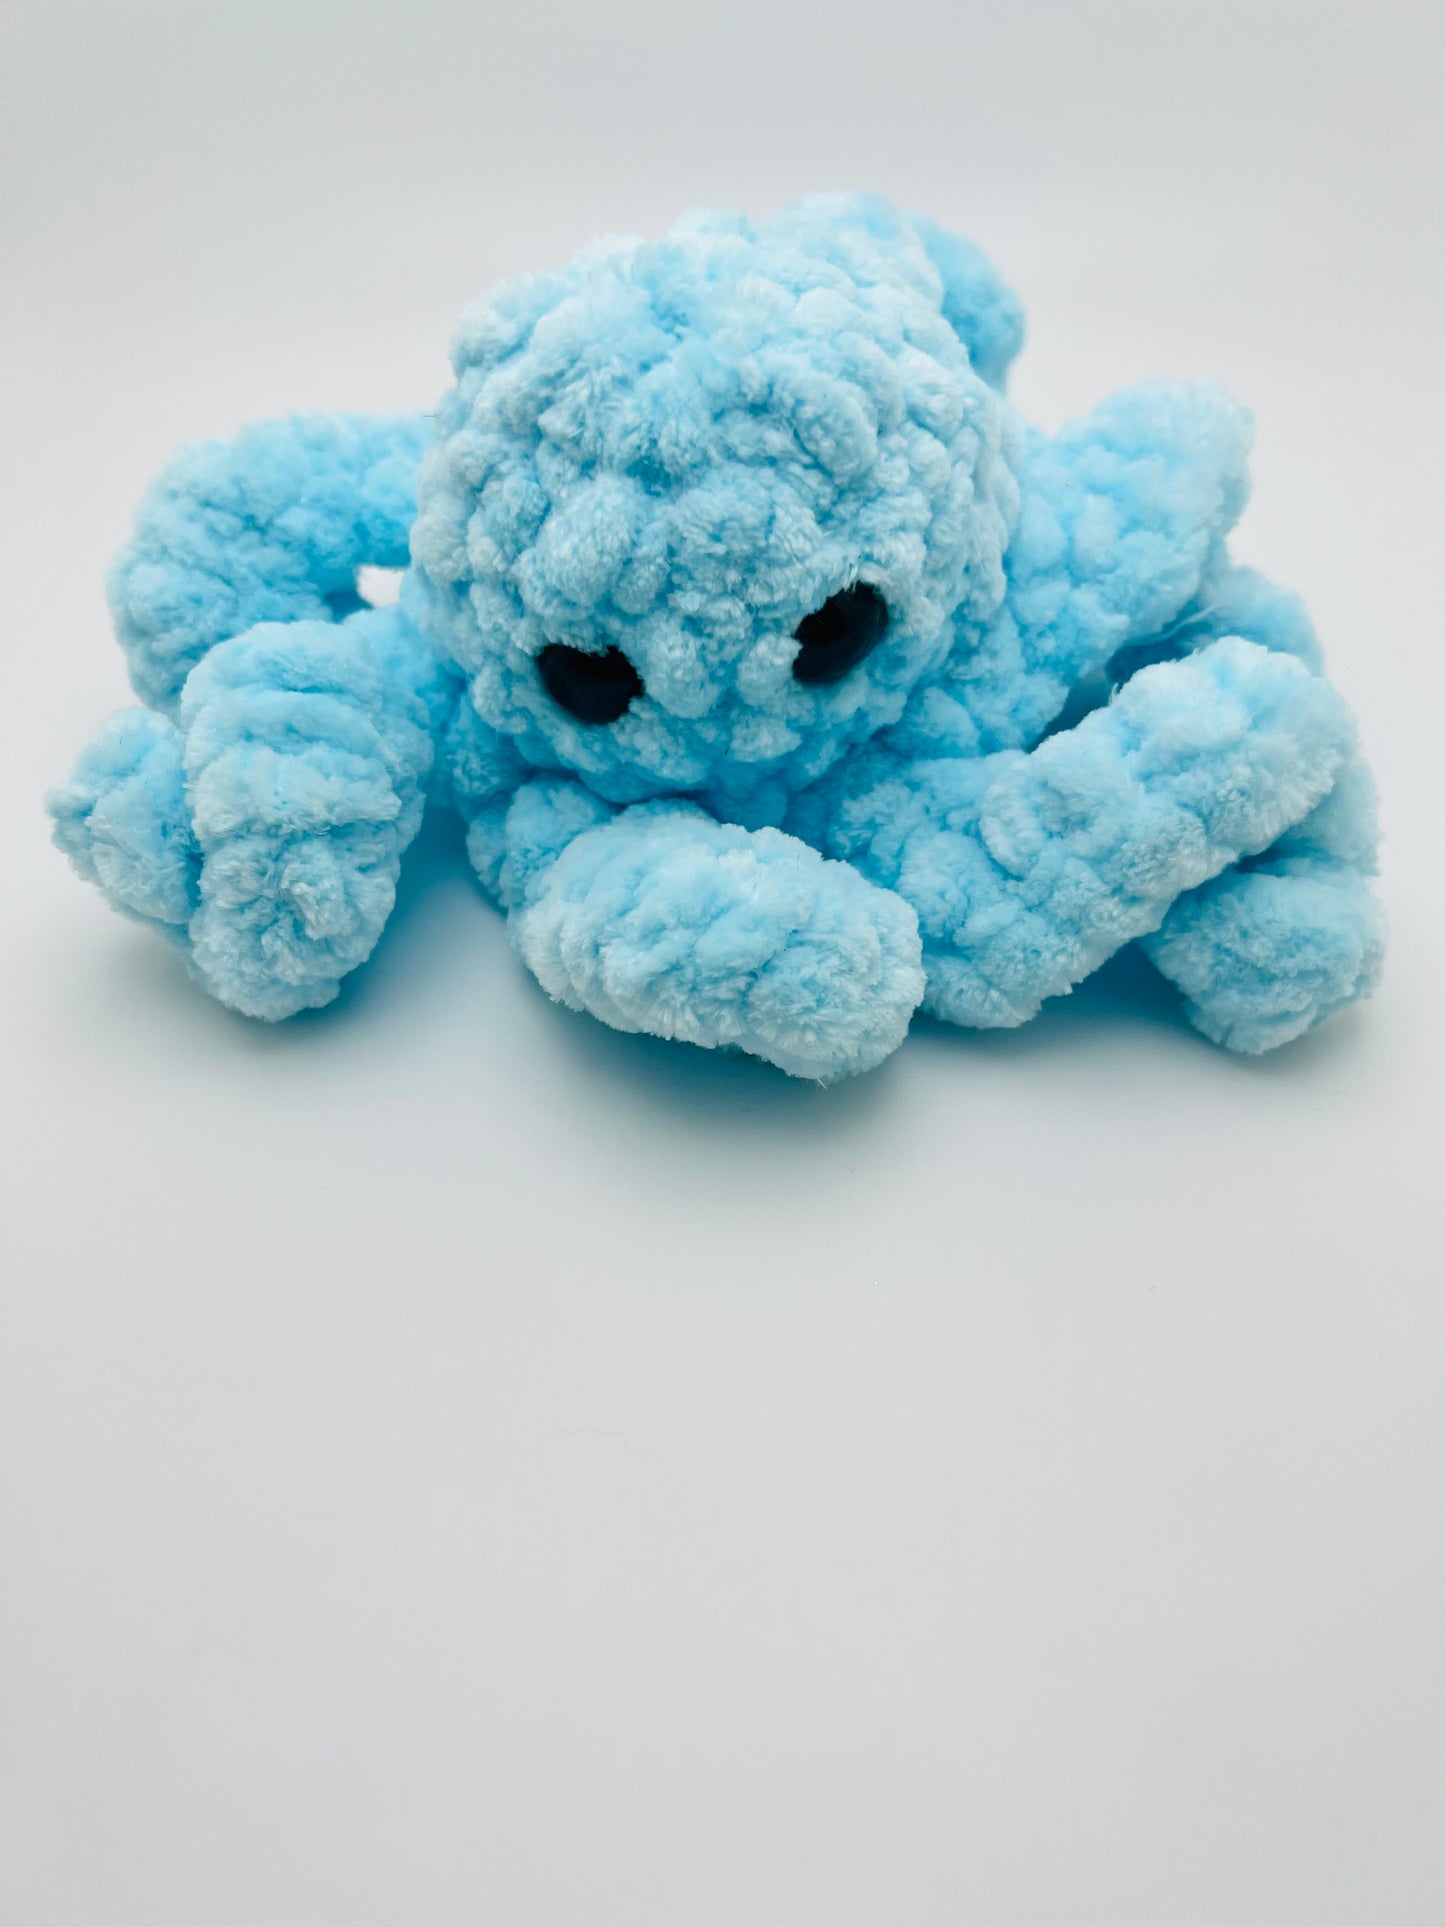 Stuffed Octopus Toy - Crochet Knitted Amigurumi Toy